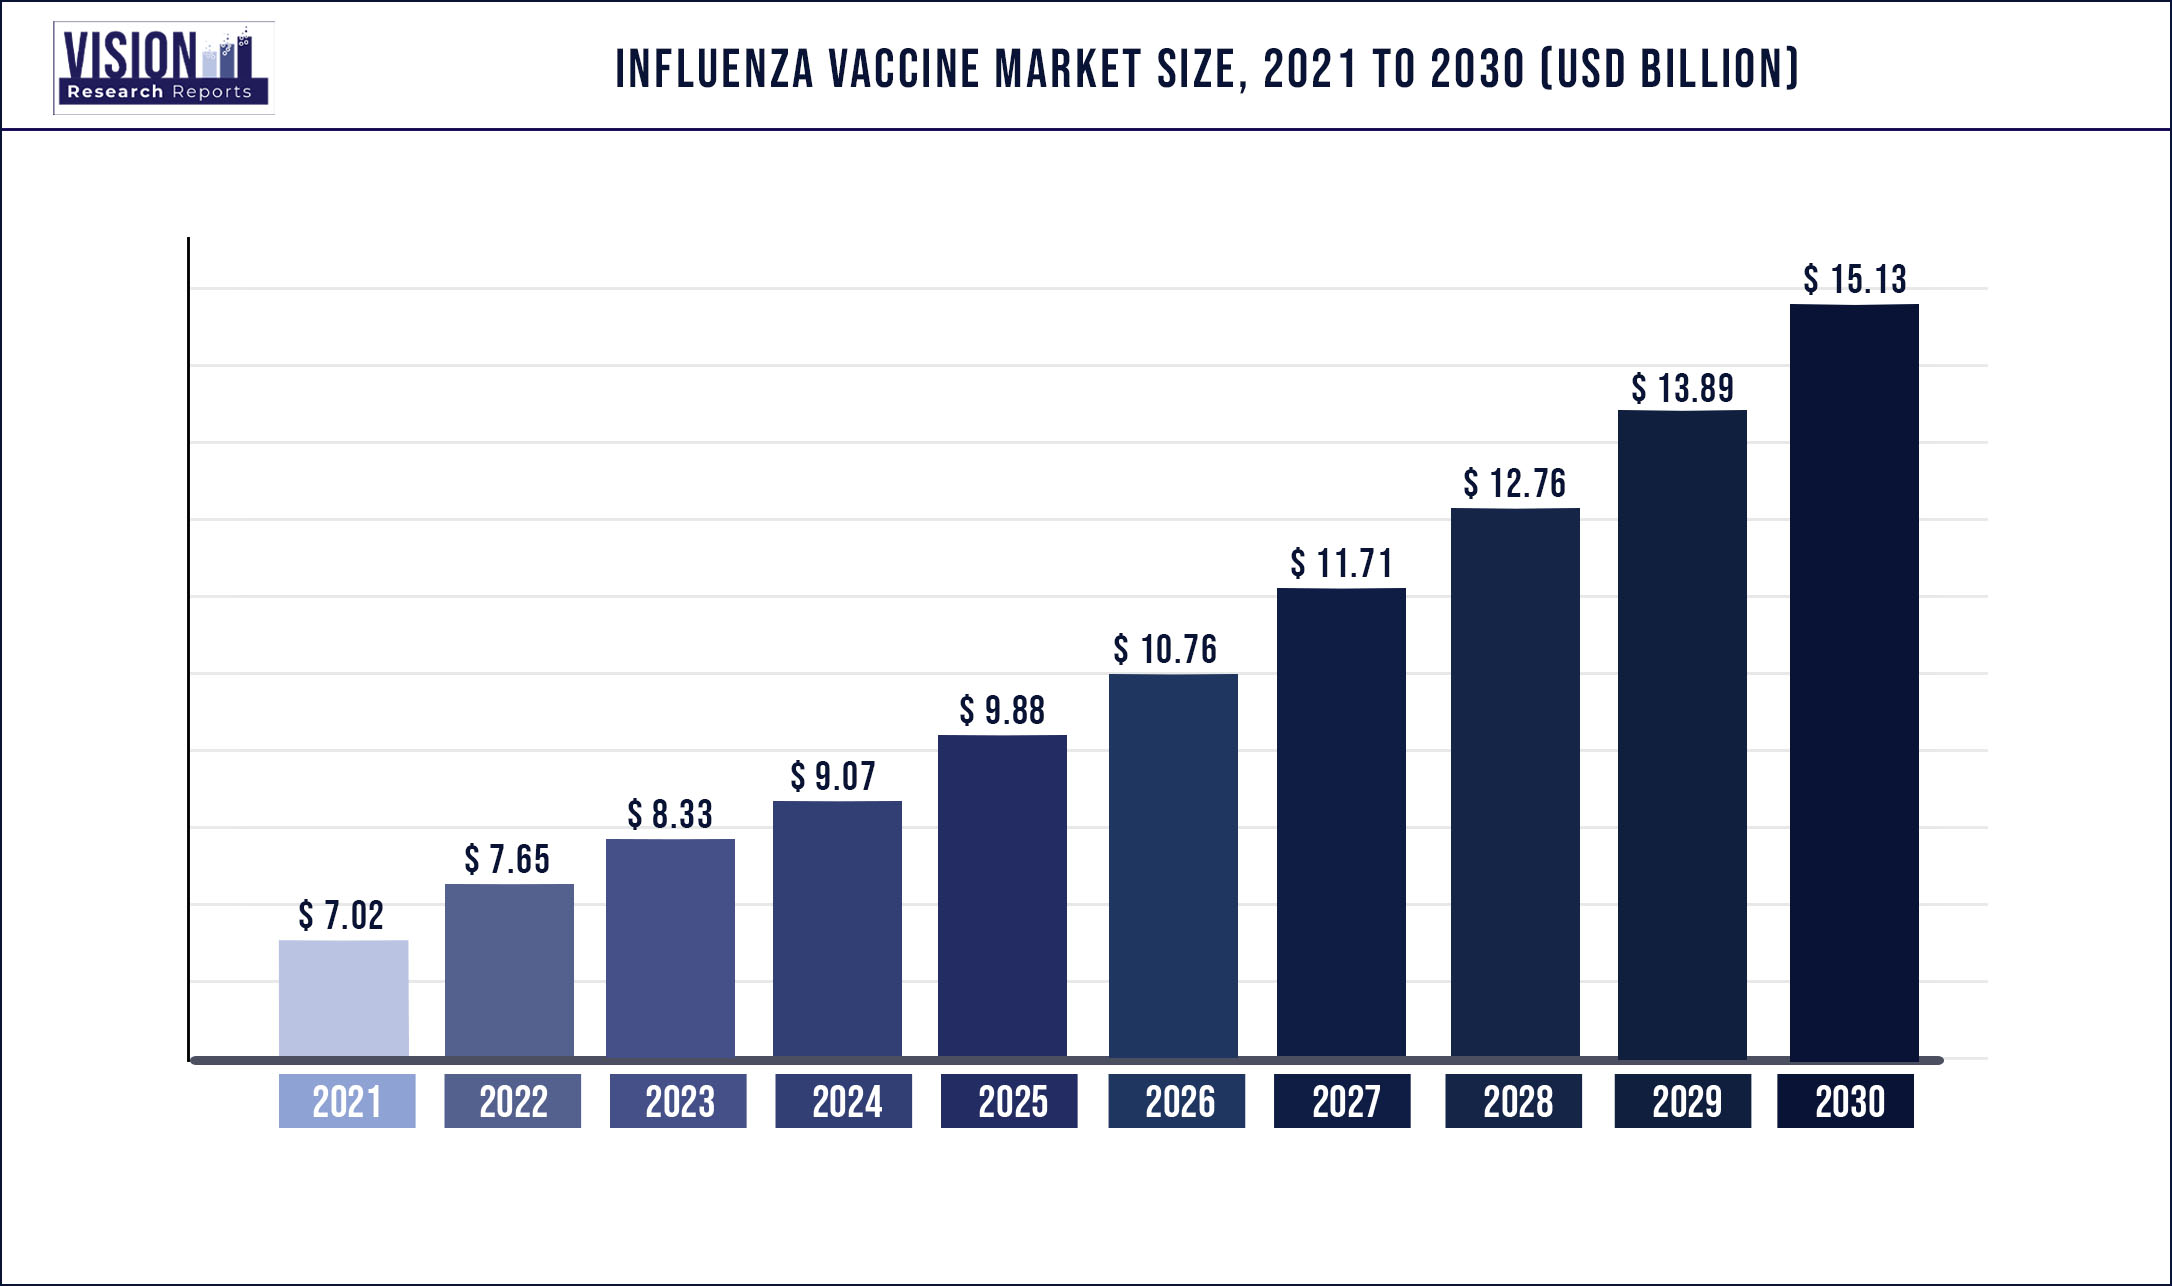 Influenza Vaccine Market Size 2021 to 2030